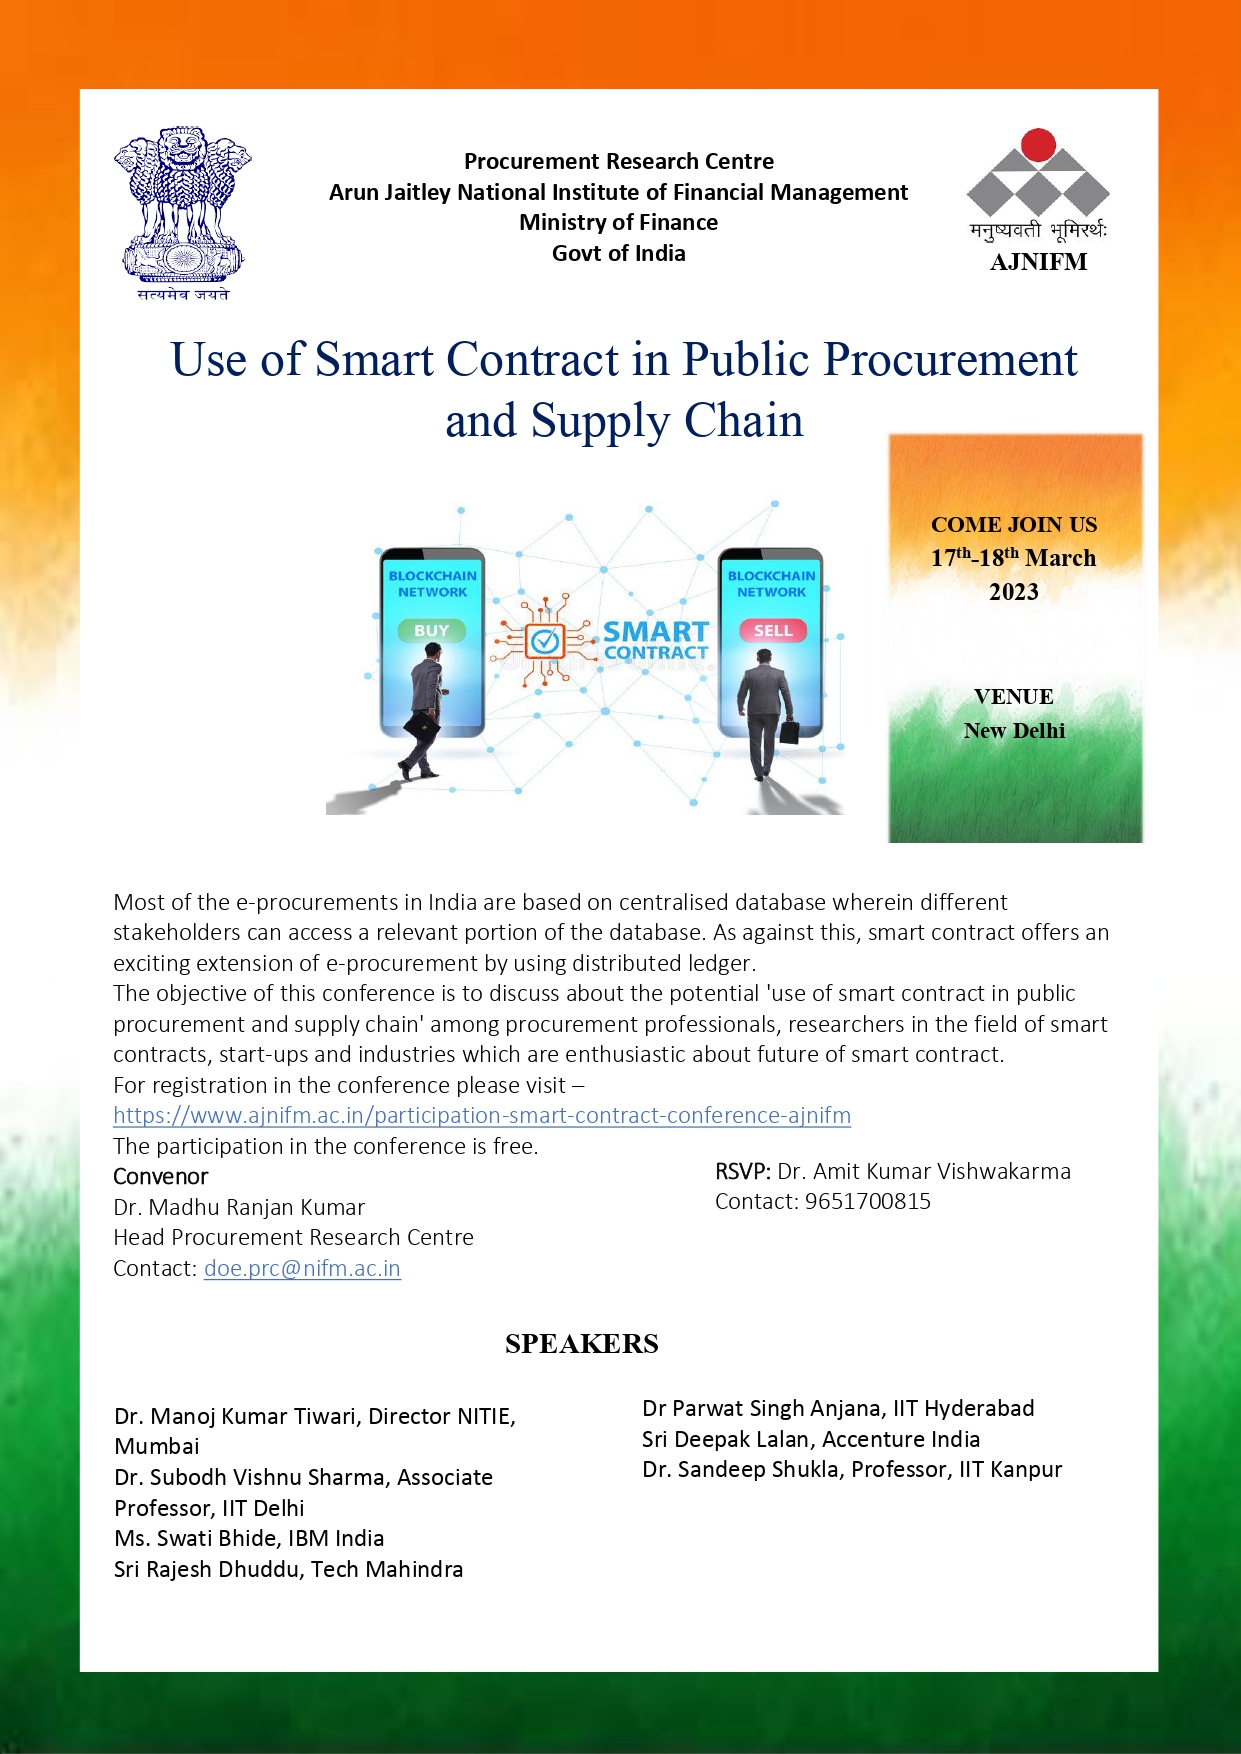 COnference on "Use of Smart Contract in Public Procurement and Supply Chain", New Delhi, Delhi, India